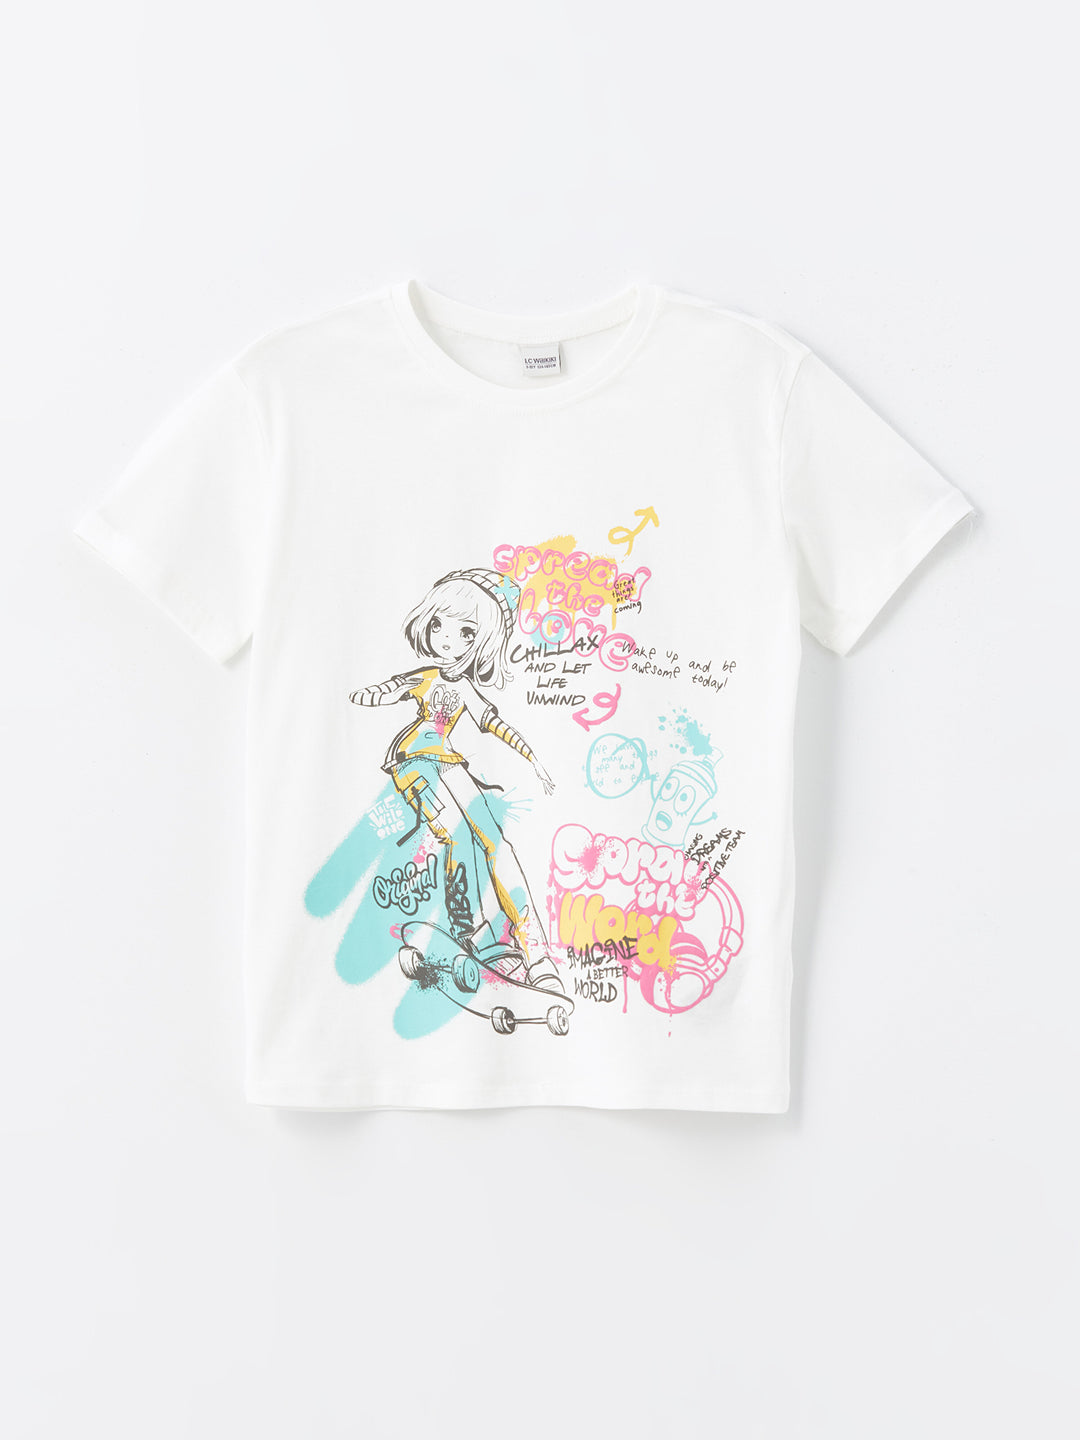 Crew Neck Anime Printed Short Sleeve Girls T-Shirt